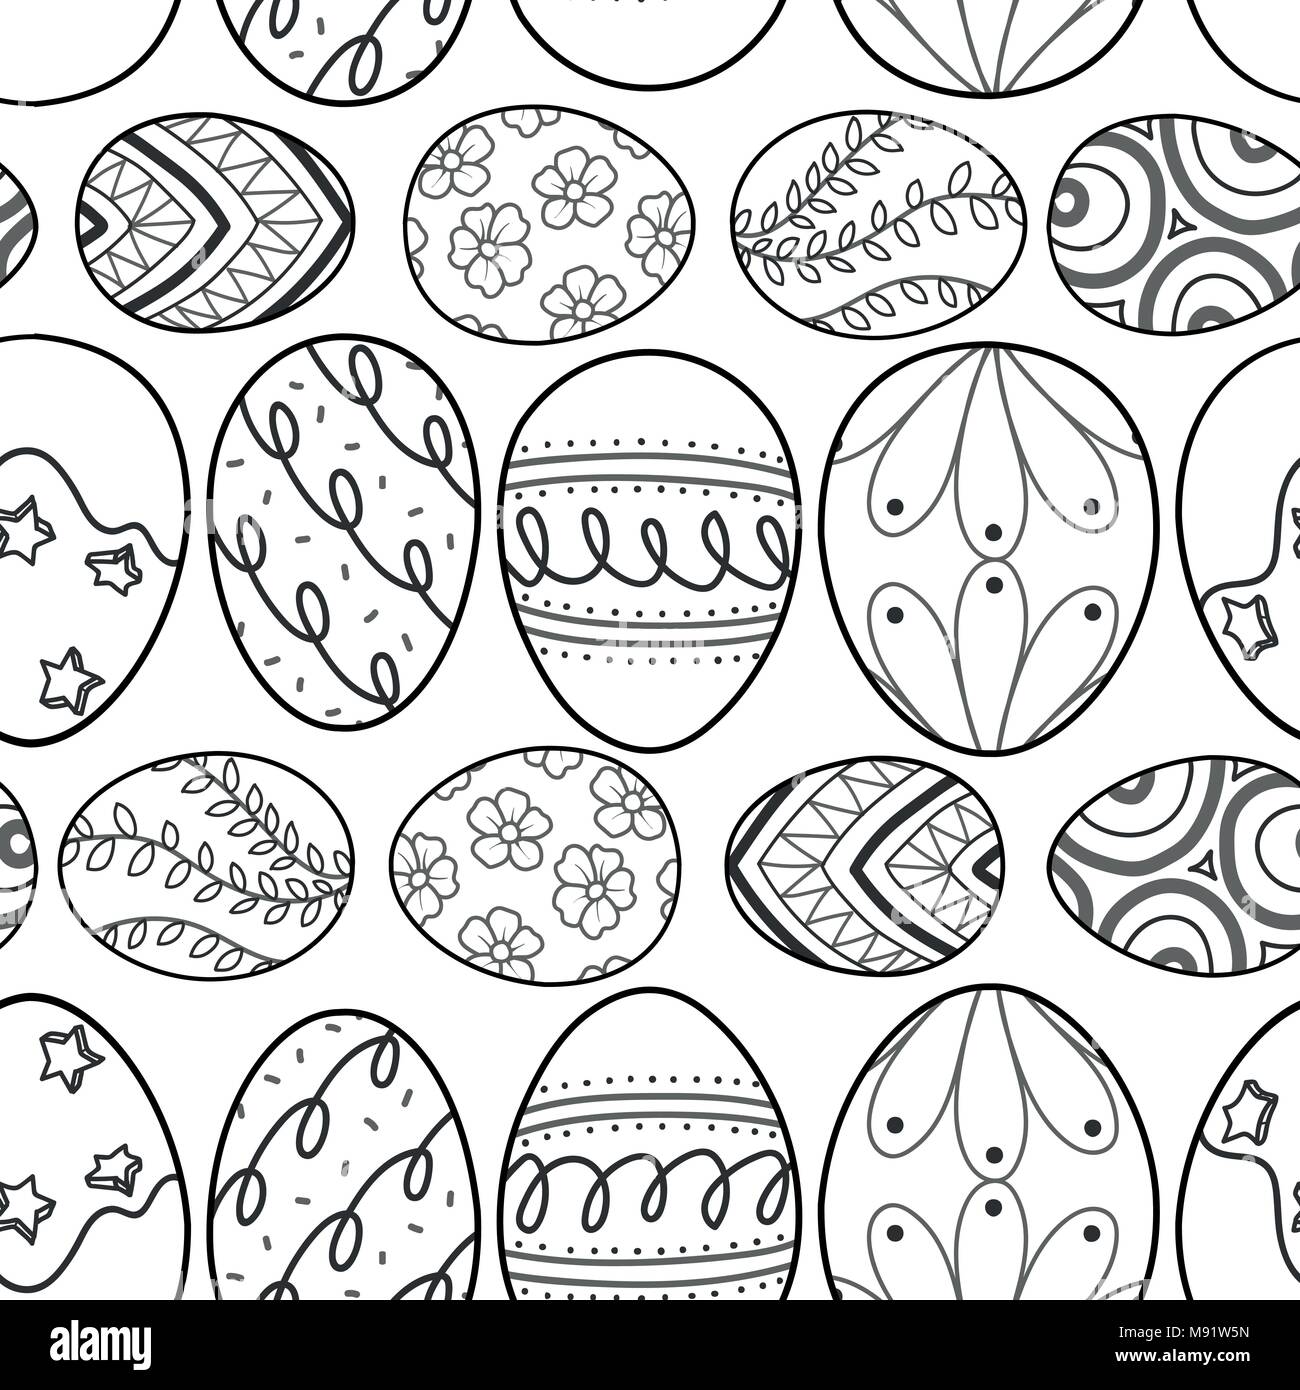 Easter eggs in black outline line up on white background. Cute hand drawn seamless pattern design for Easter festival in vector illustration. Stock Vector